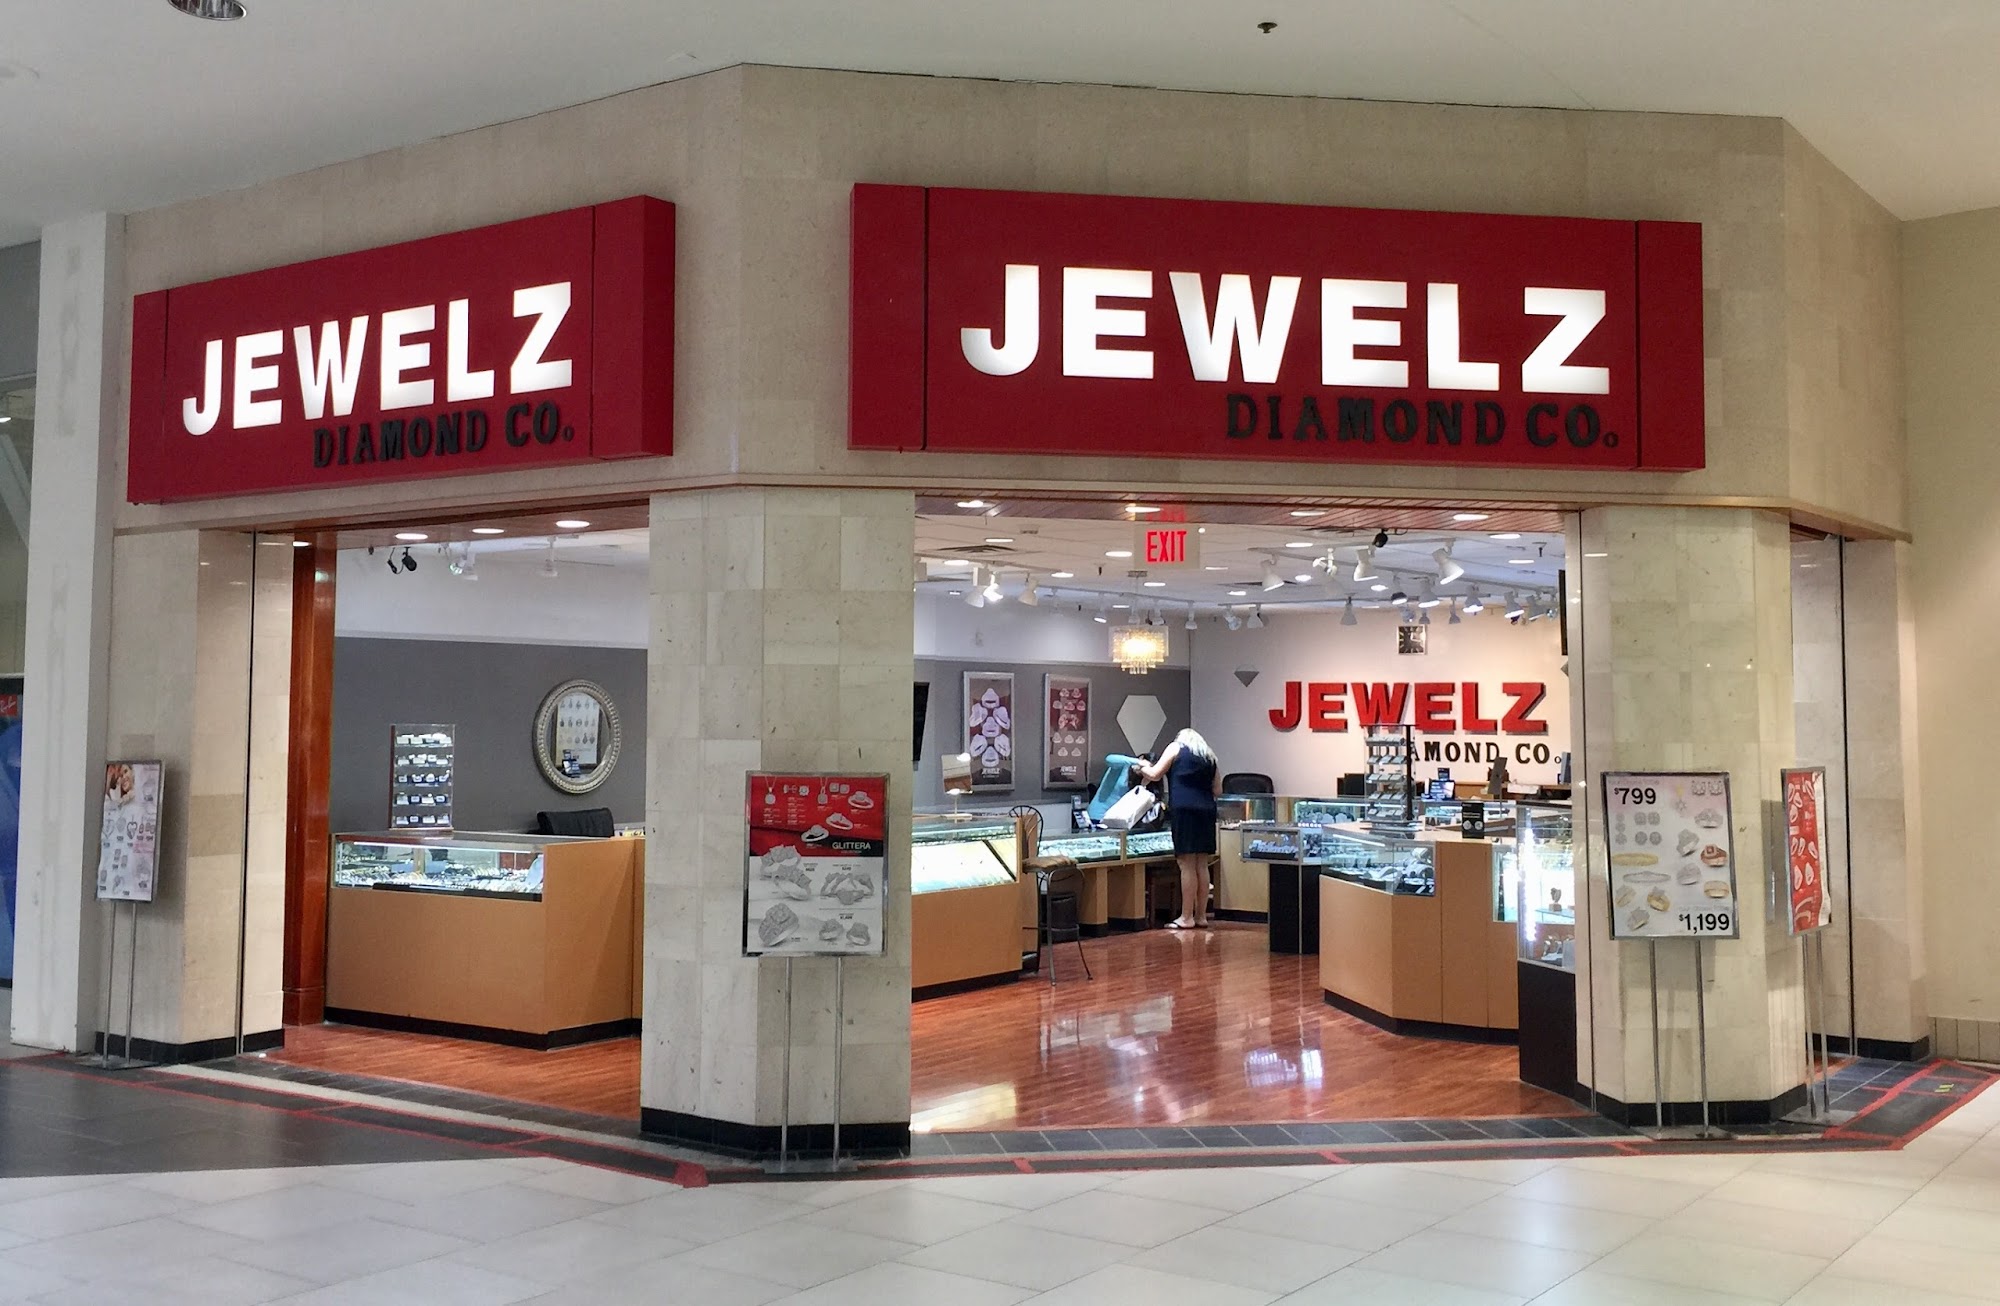 Jewelz Diamond Co.